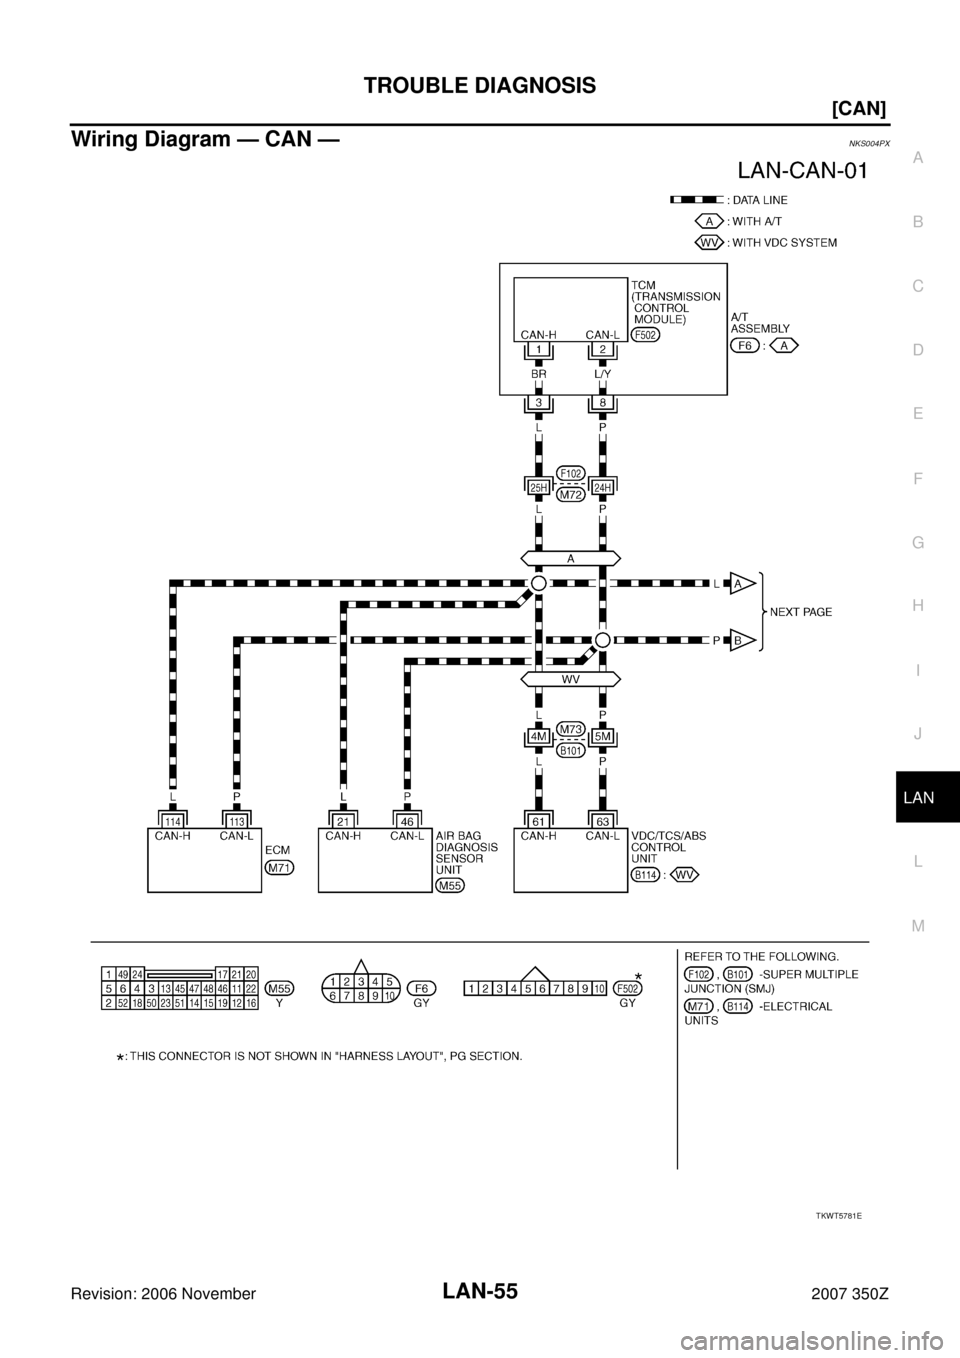 NISSAN 350Z 2007 Z33 LAN System Workshop Manual TROUBLE DIAGNOSIS
LAN-55
[CAN]
C
D
E
F
G
H
I
J
L
MA
B
LAN
Revision: 2006 November2007 350Z
Wiring Diagram — CAN —NKS004PX
TKWT5781E 